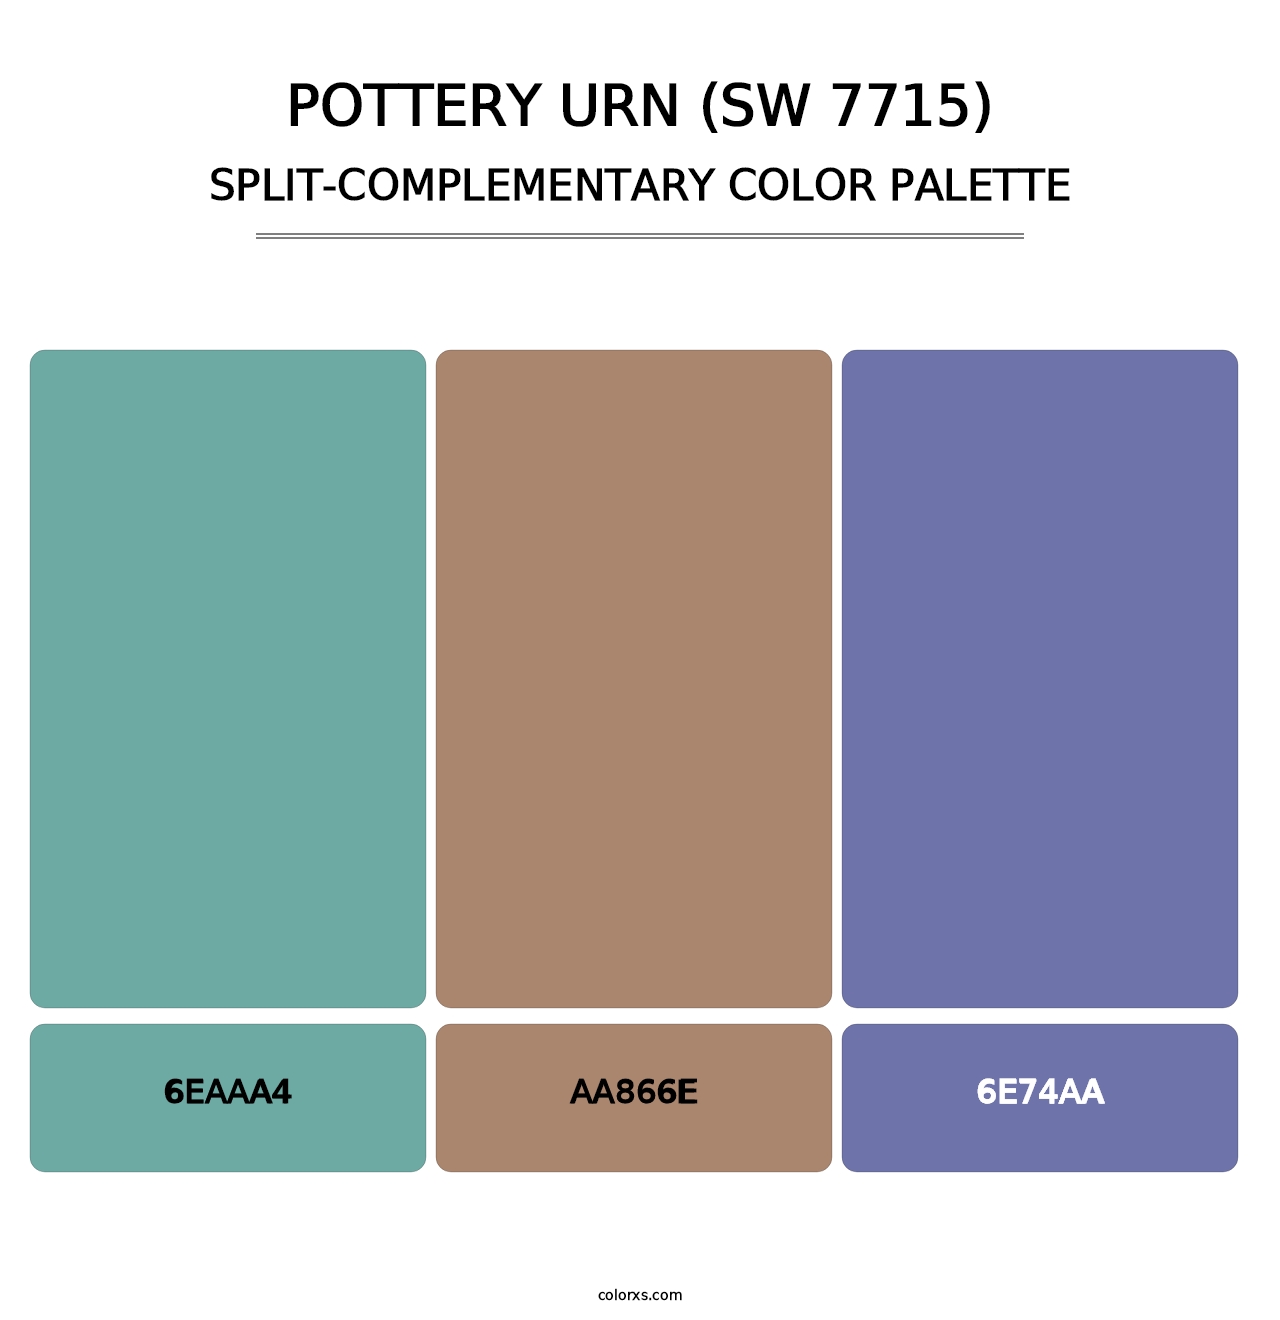 Pottery Urn (SW 7715) - Split-Complementary Color Palette